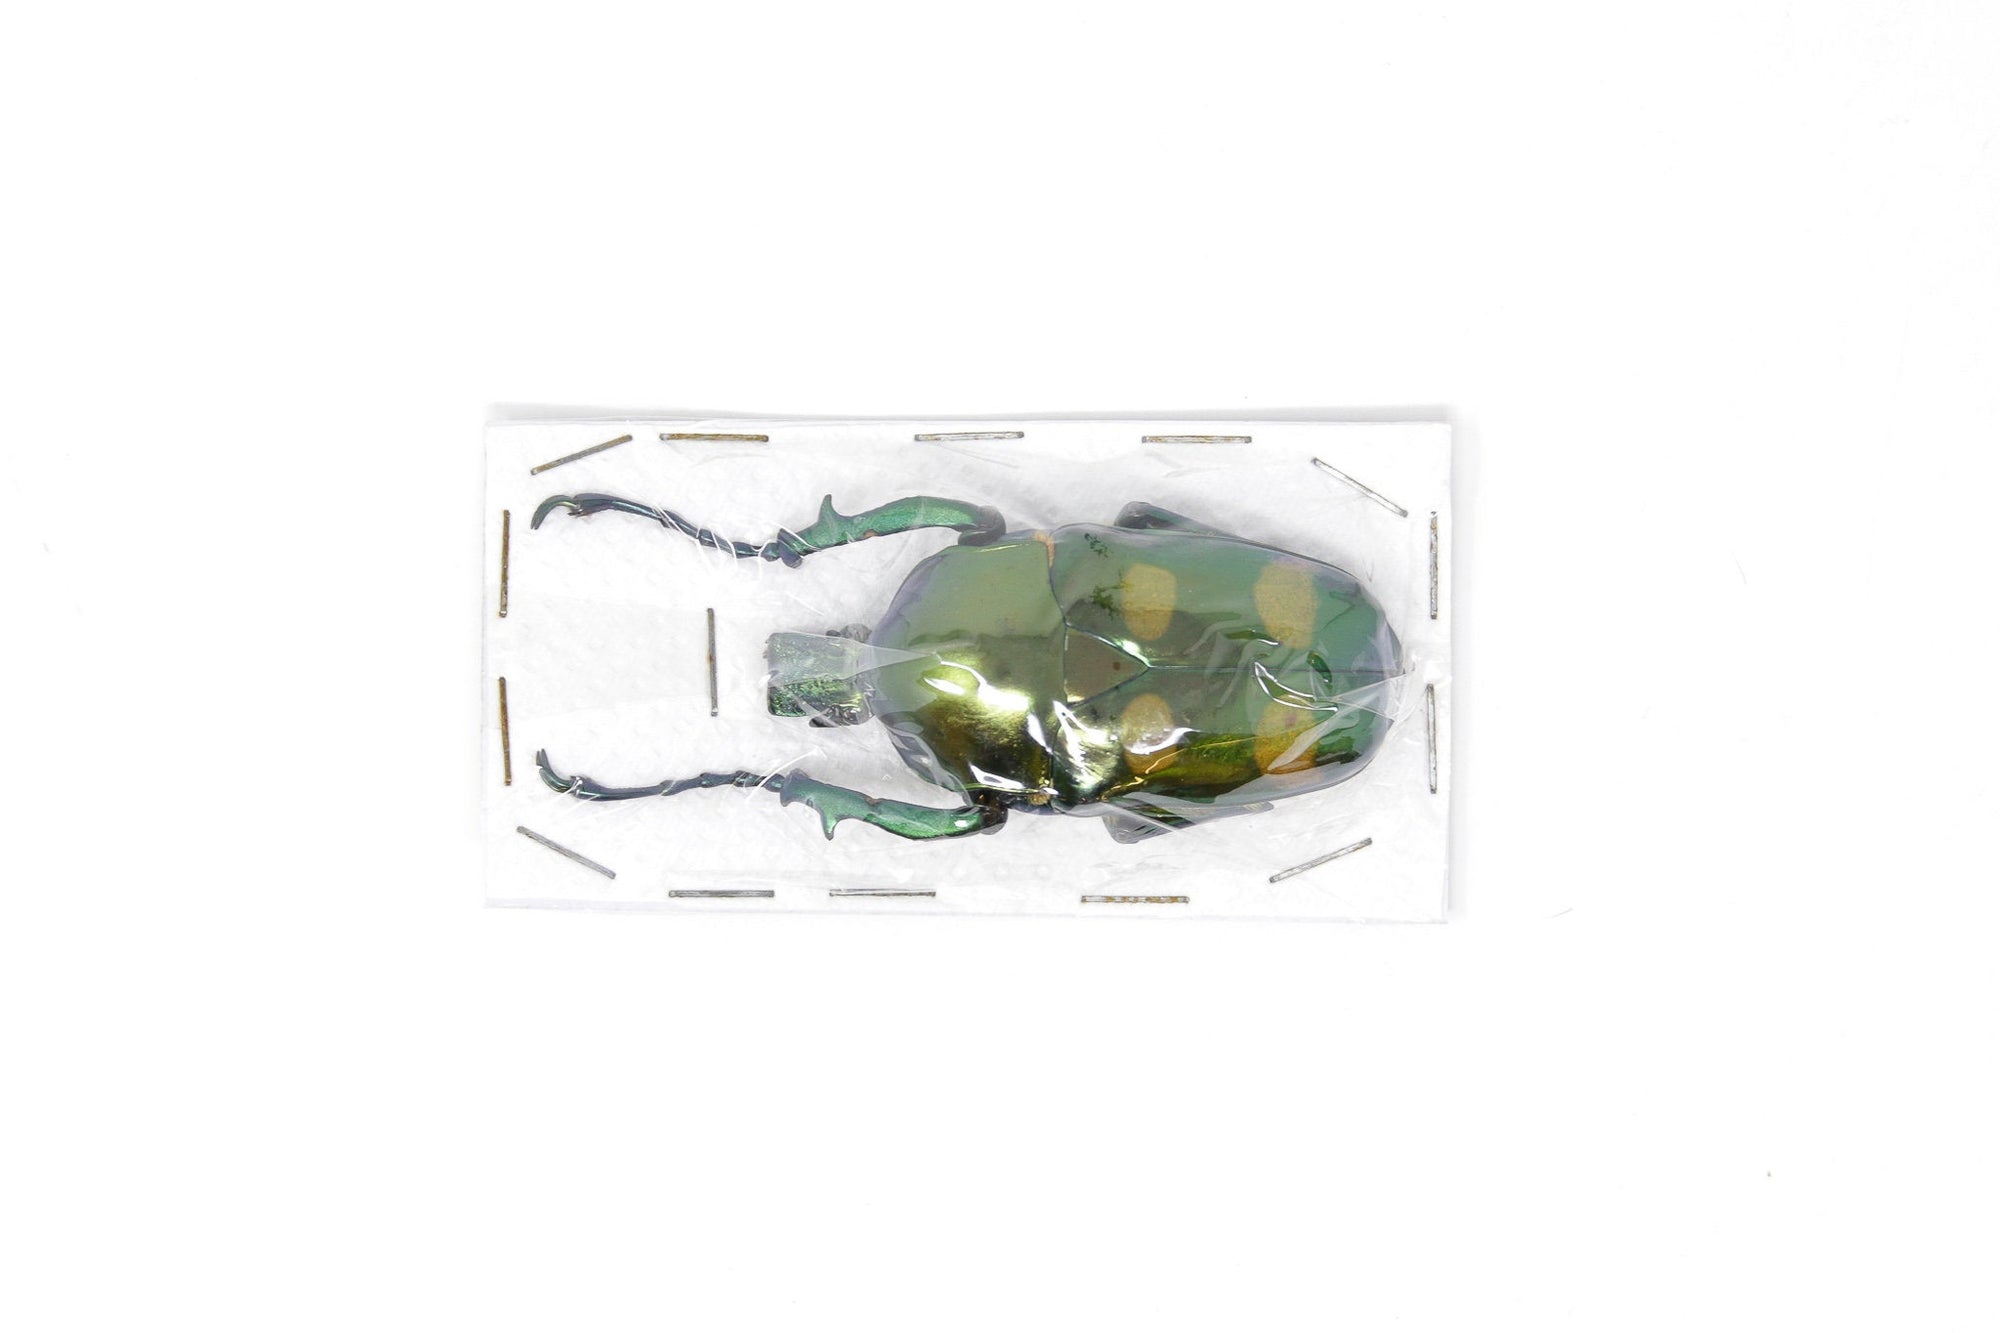 Jumnos ruckeri ruckeri 54.5mm A1 | Thailand Flower Beetle, Entomology Specimen